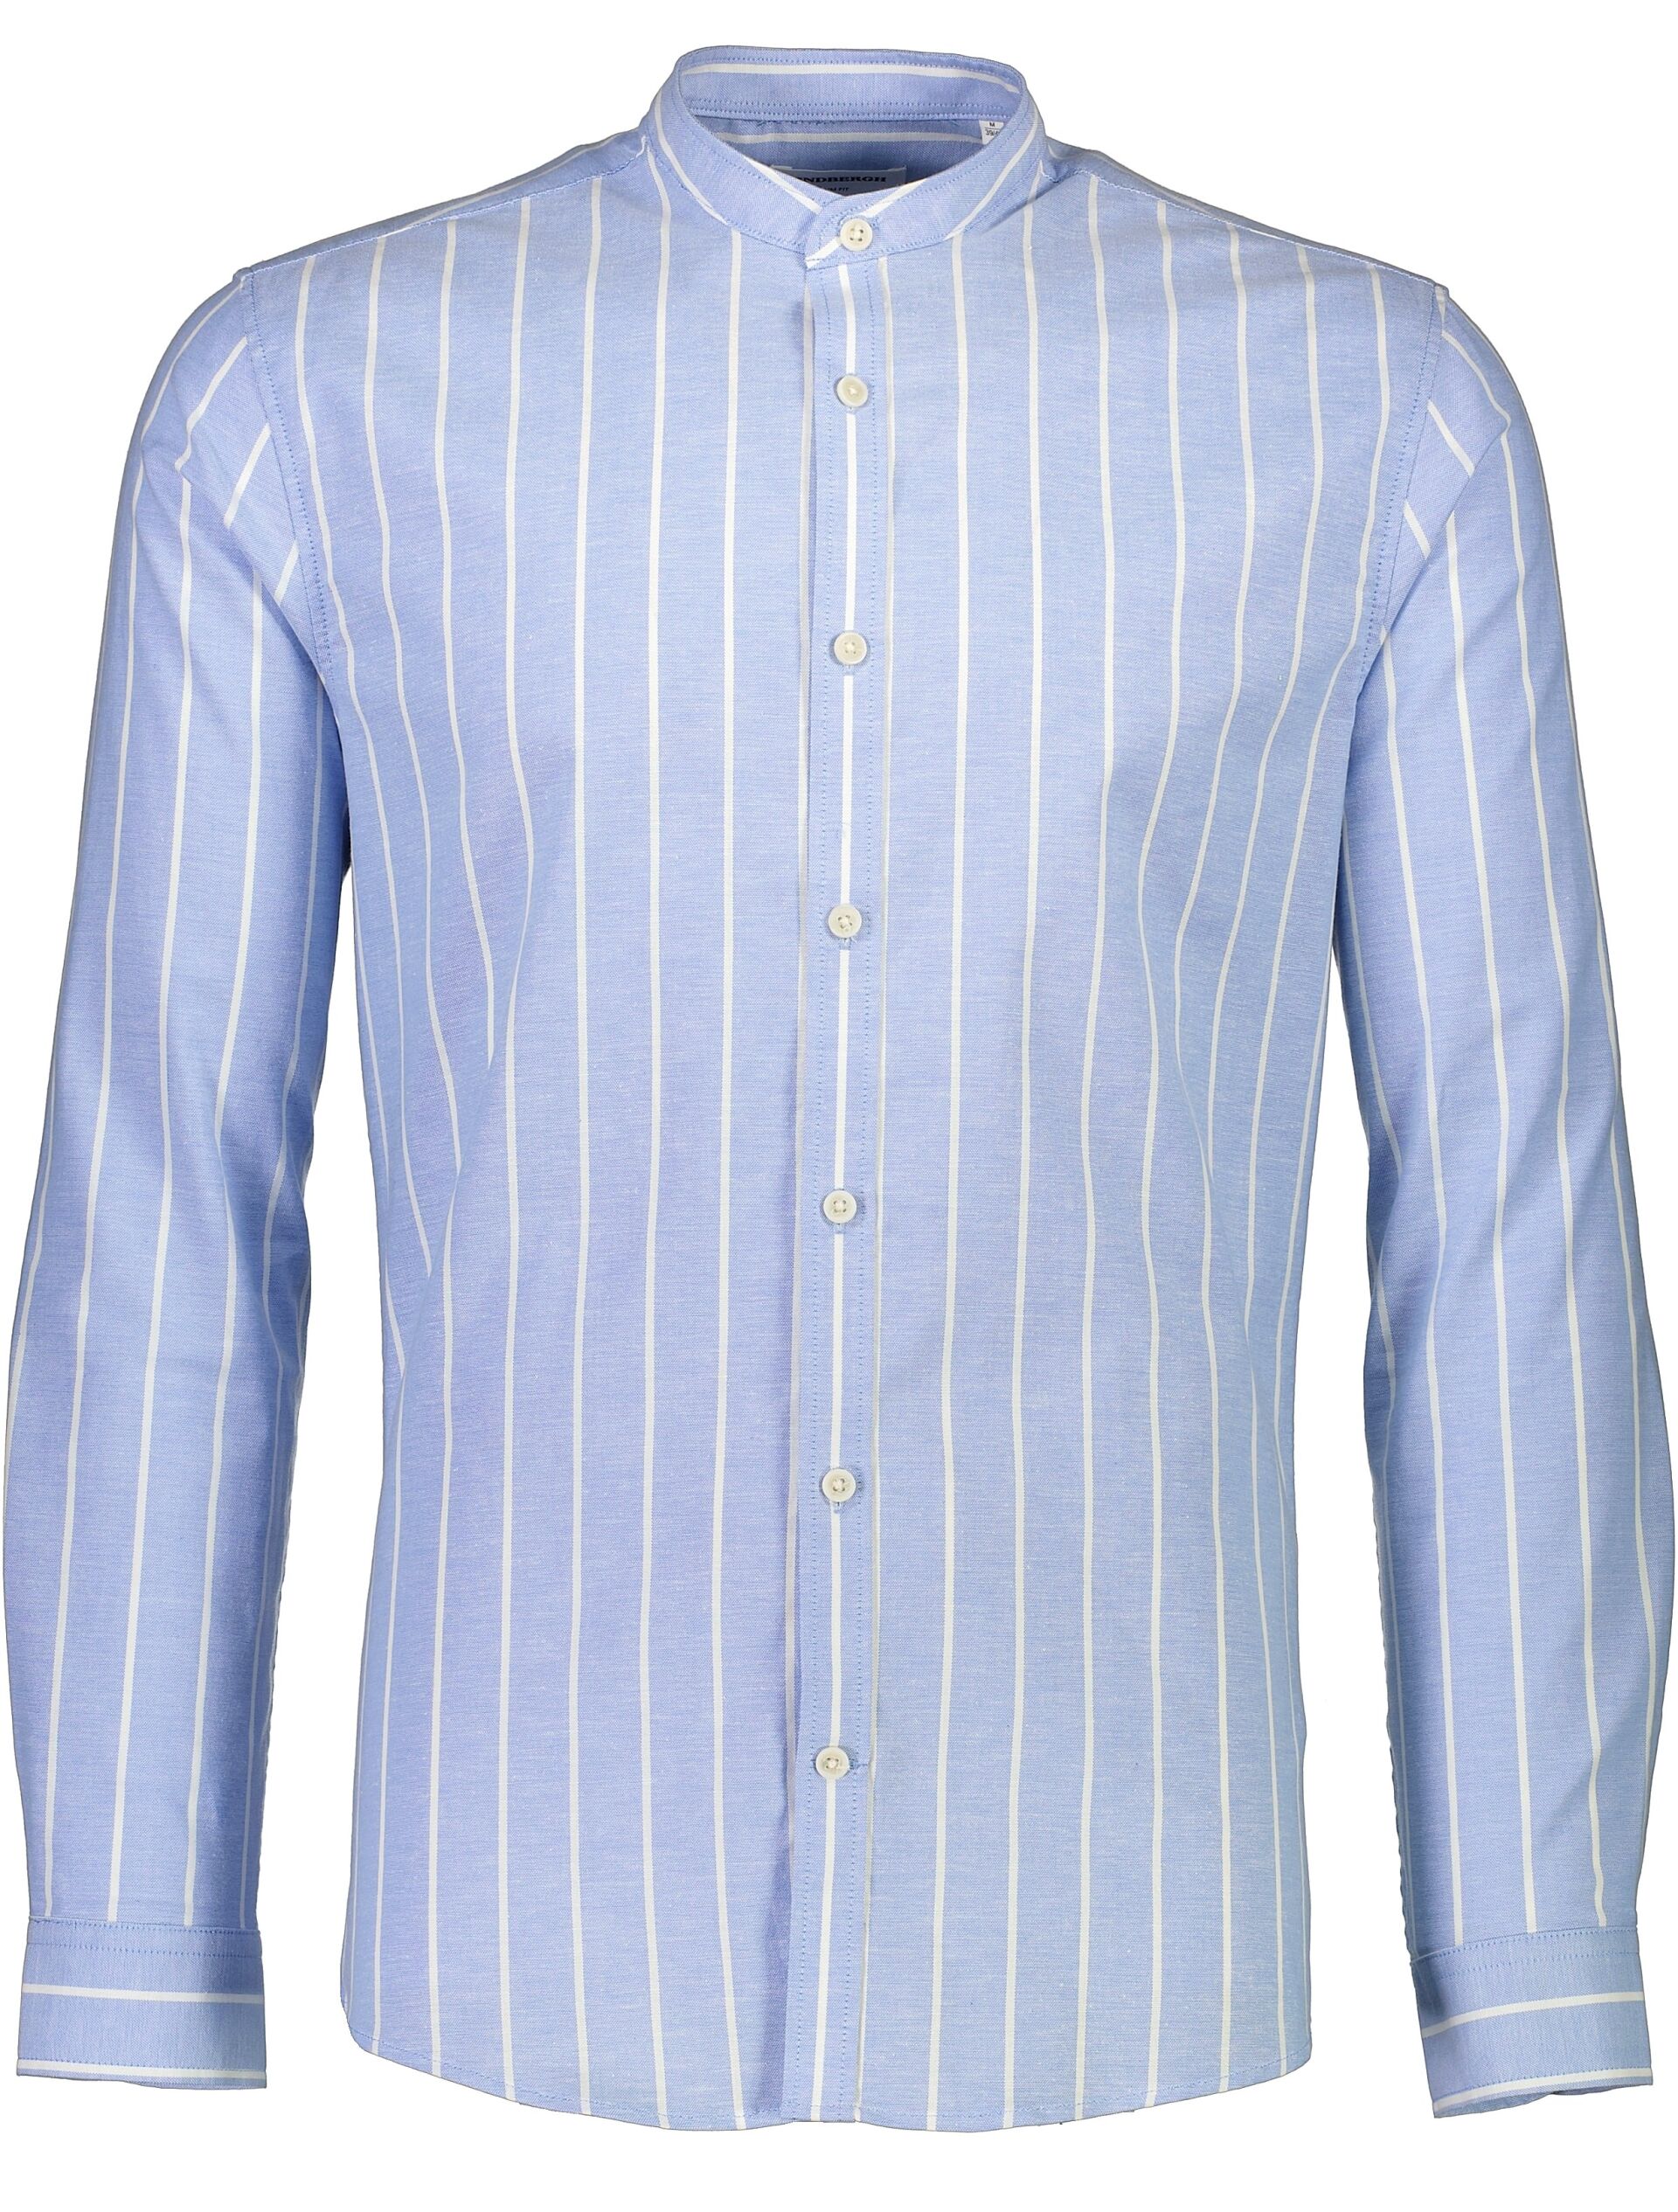 Oxford shirt Oxford shirt Blue 30-203536A